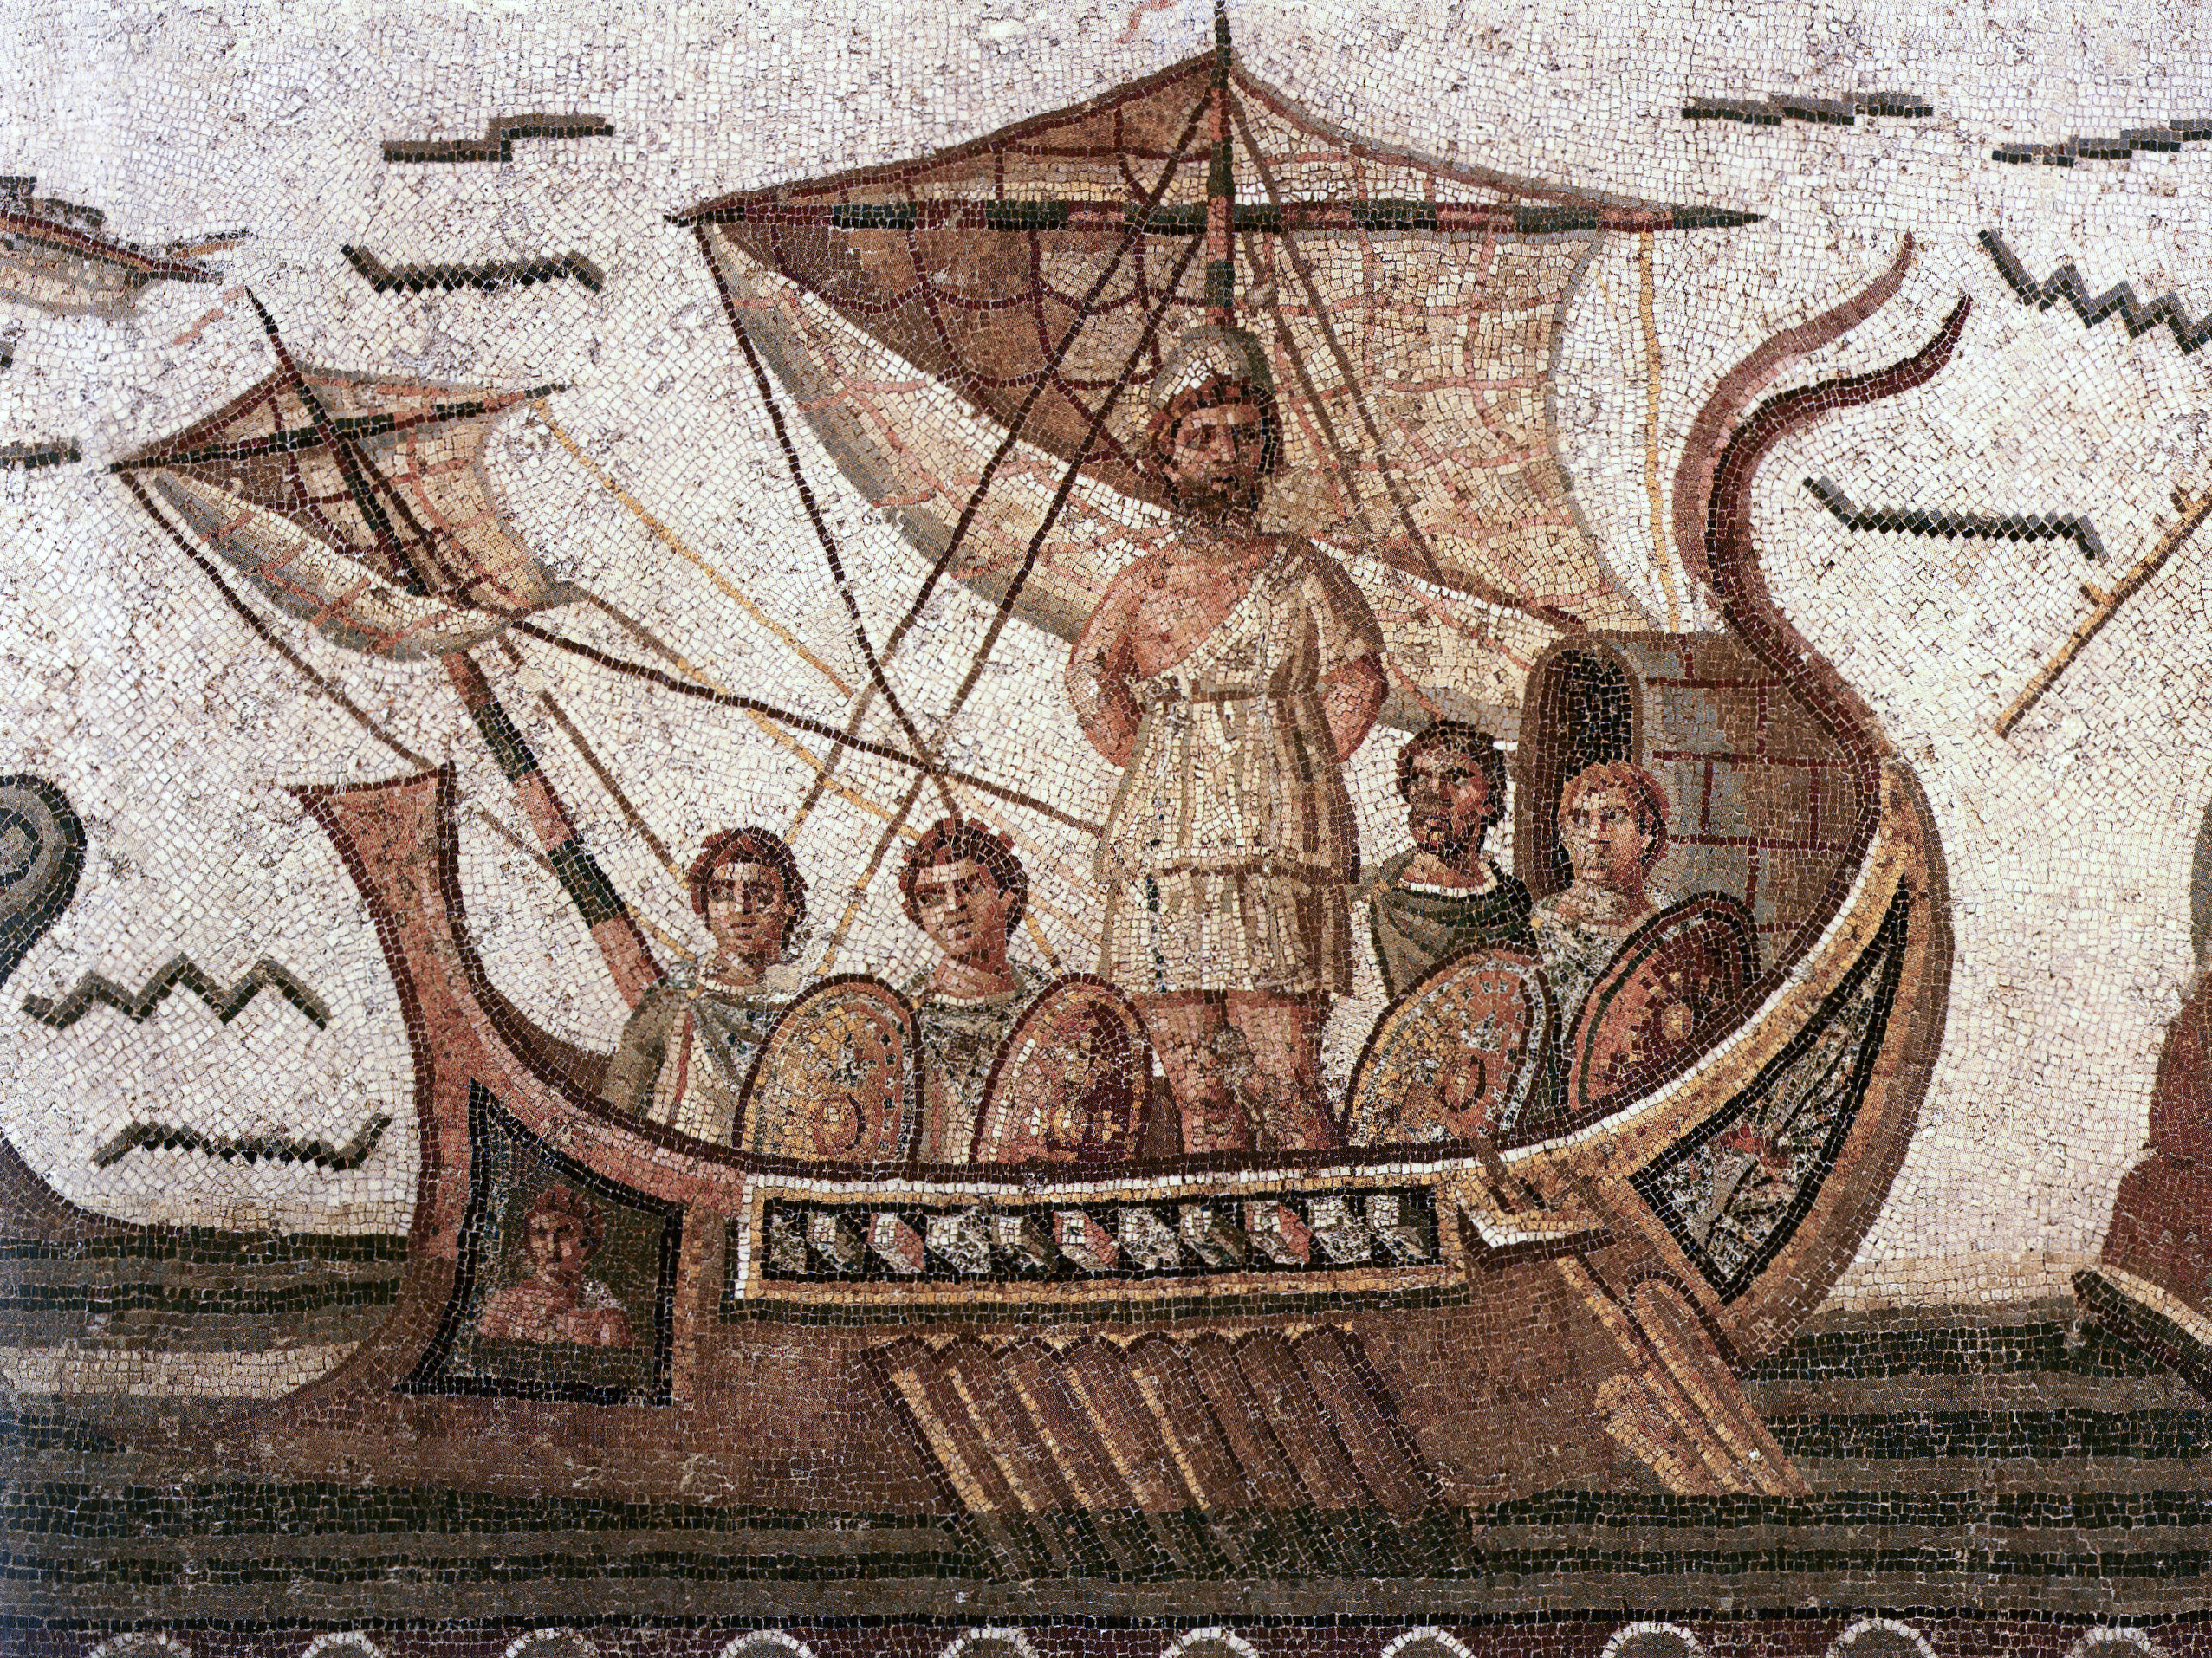 Ulysses' sea voyage